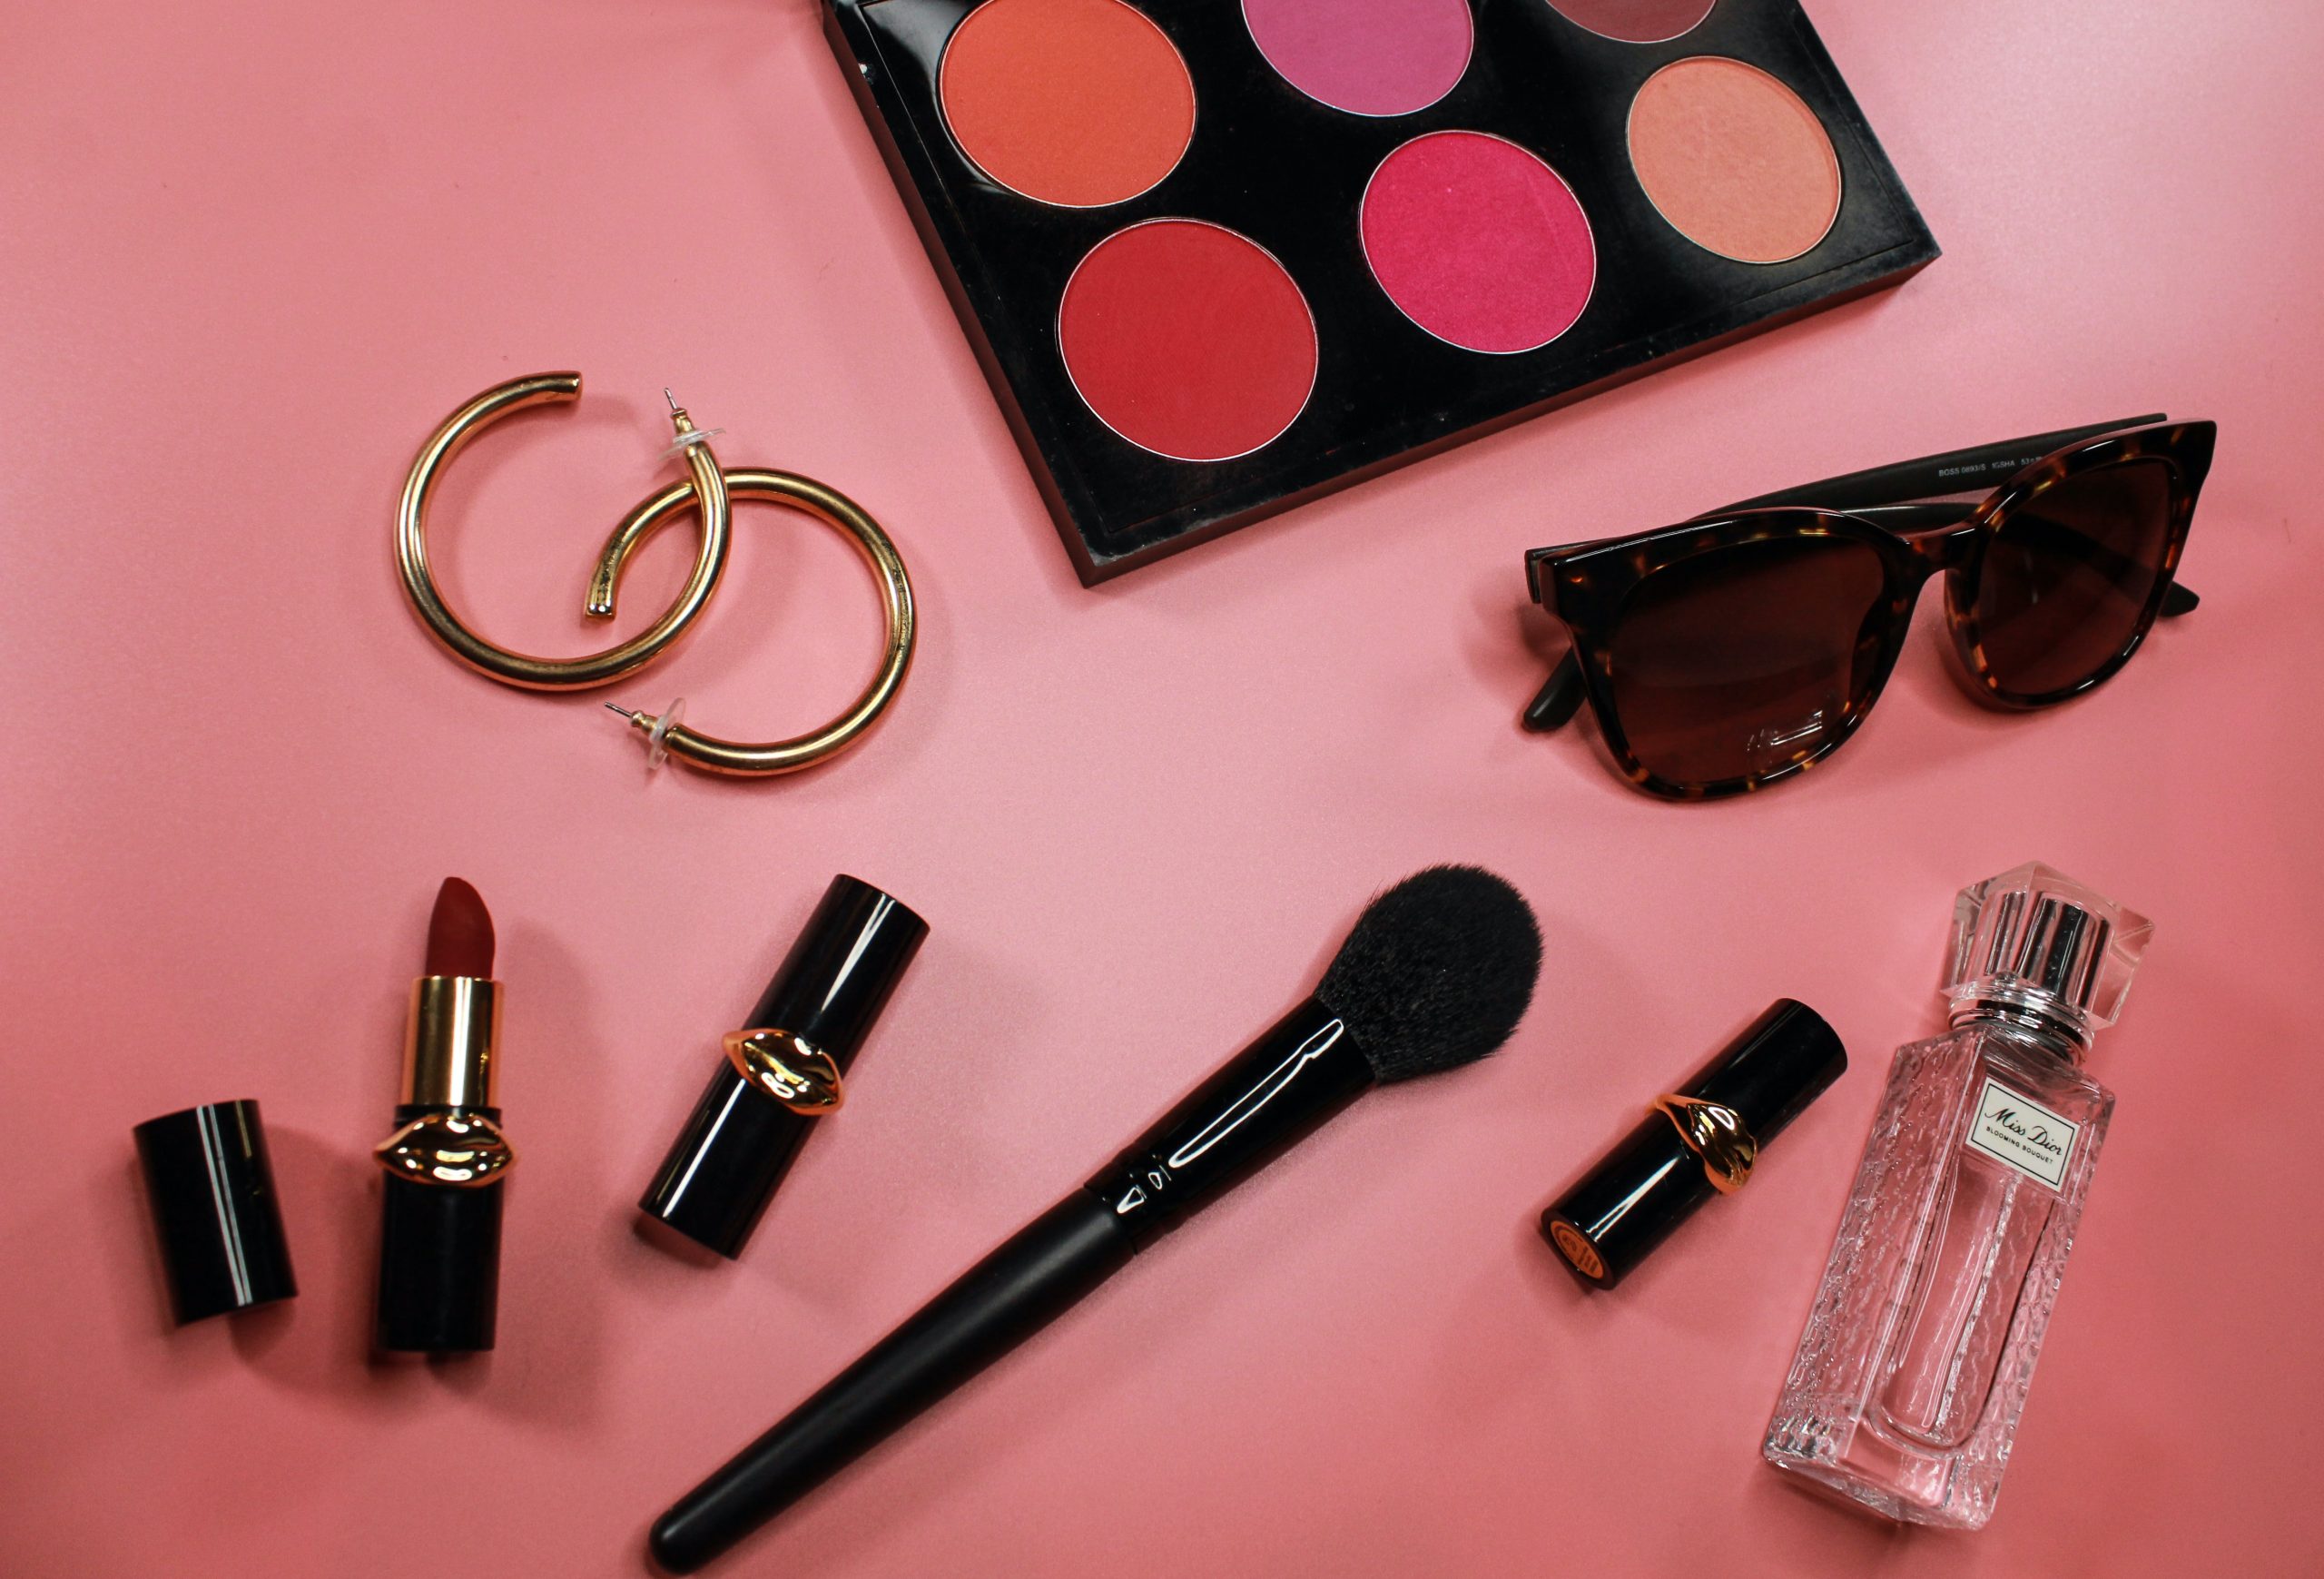 makeup palette: eyeshadow, make up brush, earrings, lipstick, sunglasses